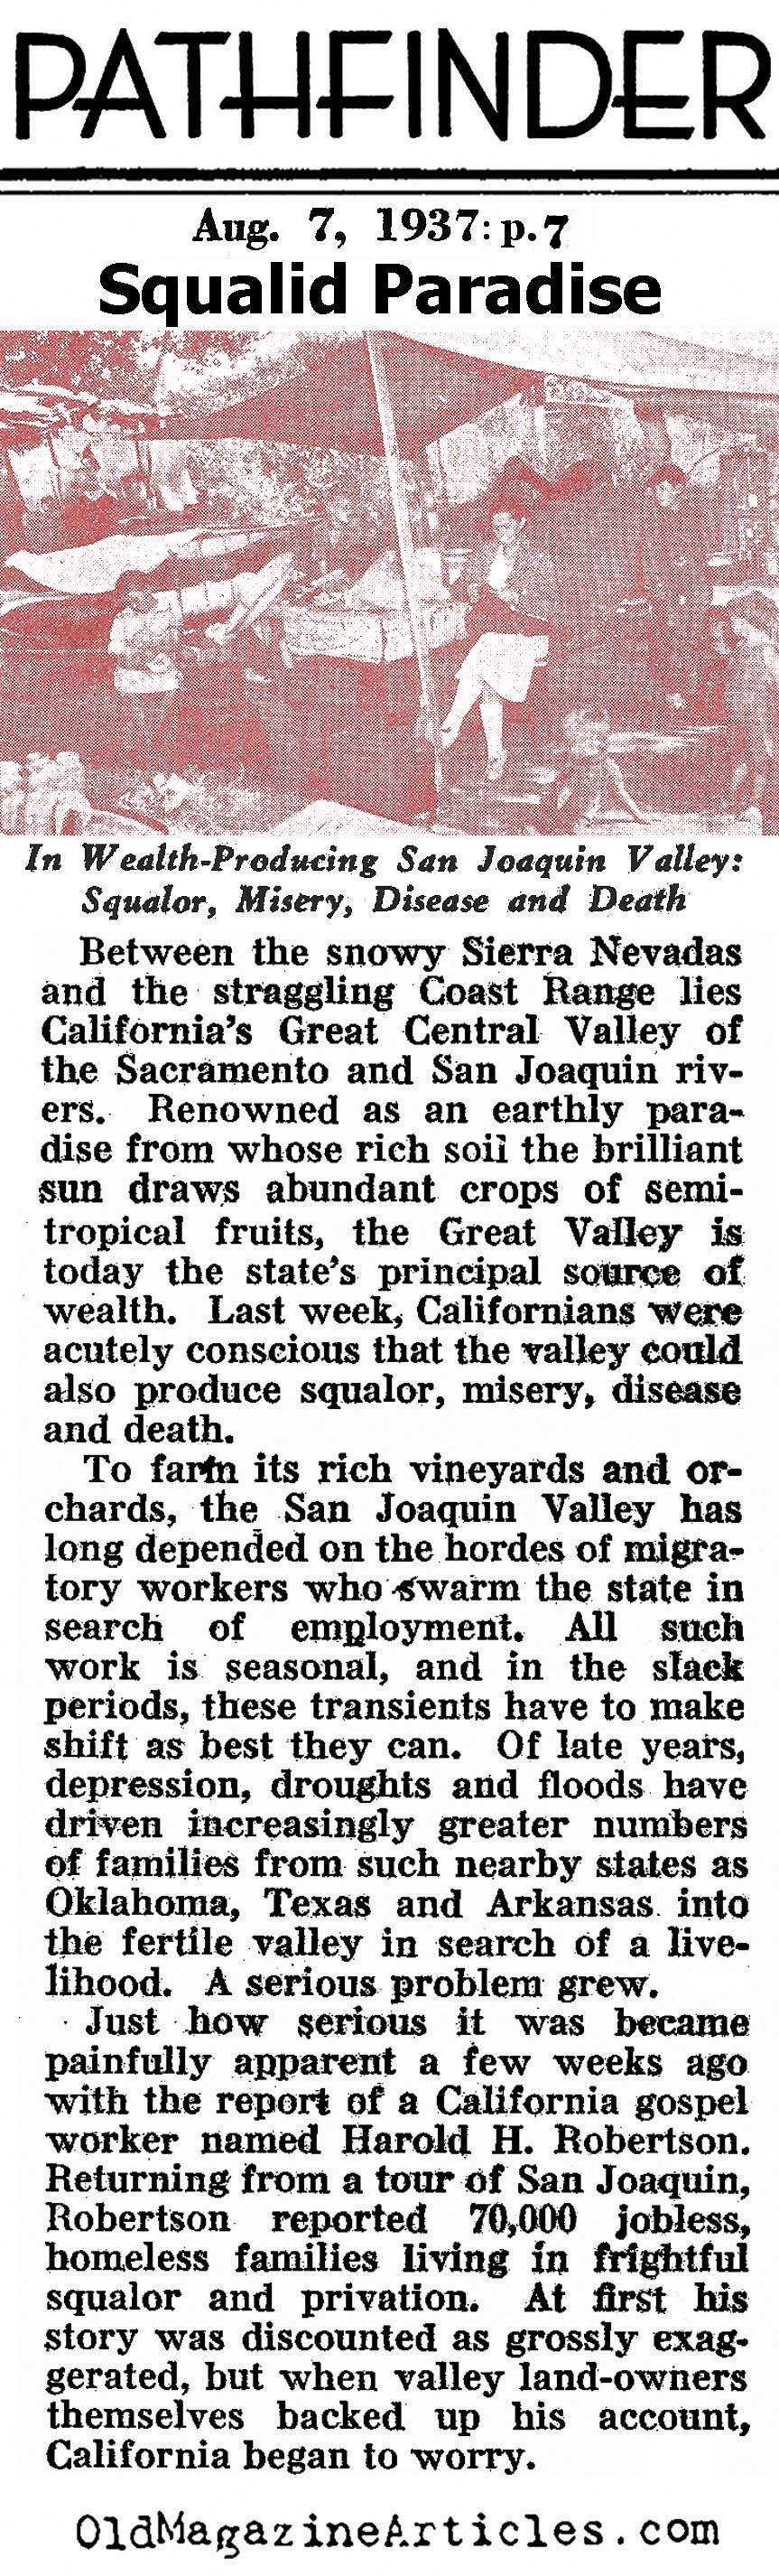 Starvation in the San Joaquin Valley (Pathfinder Magazine, 1937)